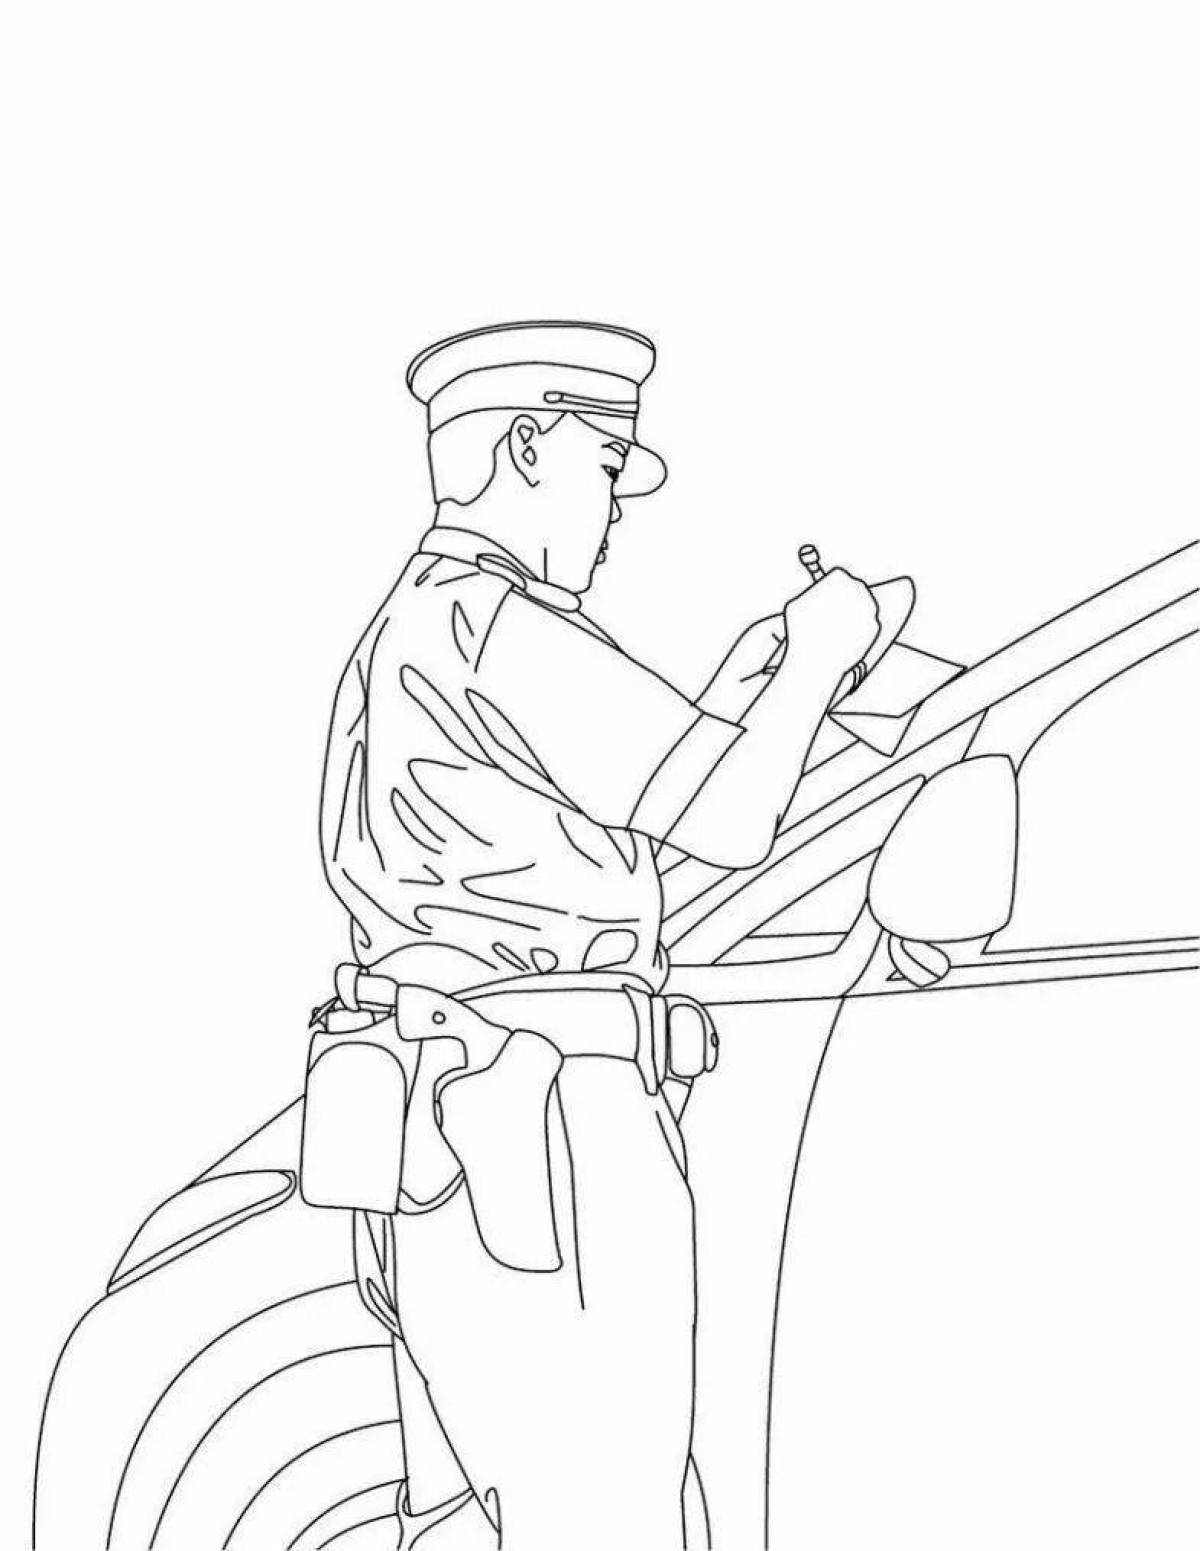 Colored police figure